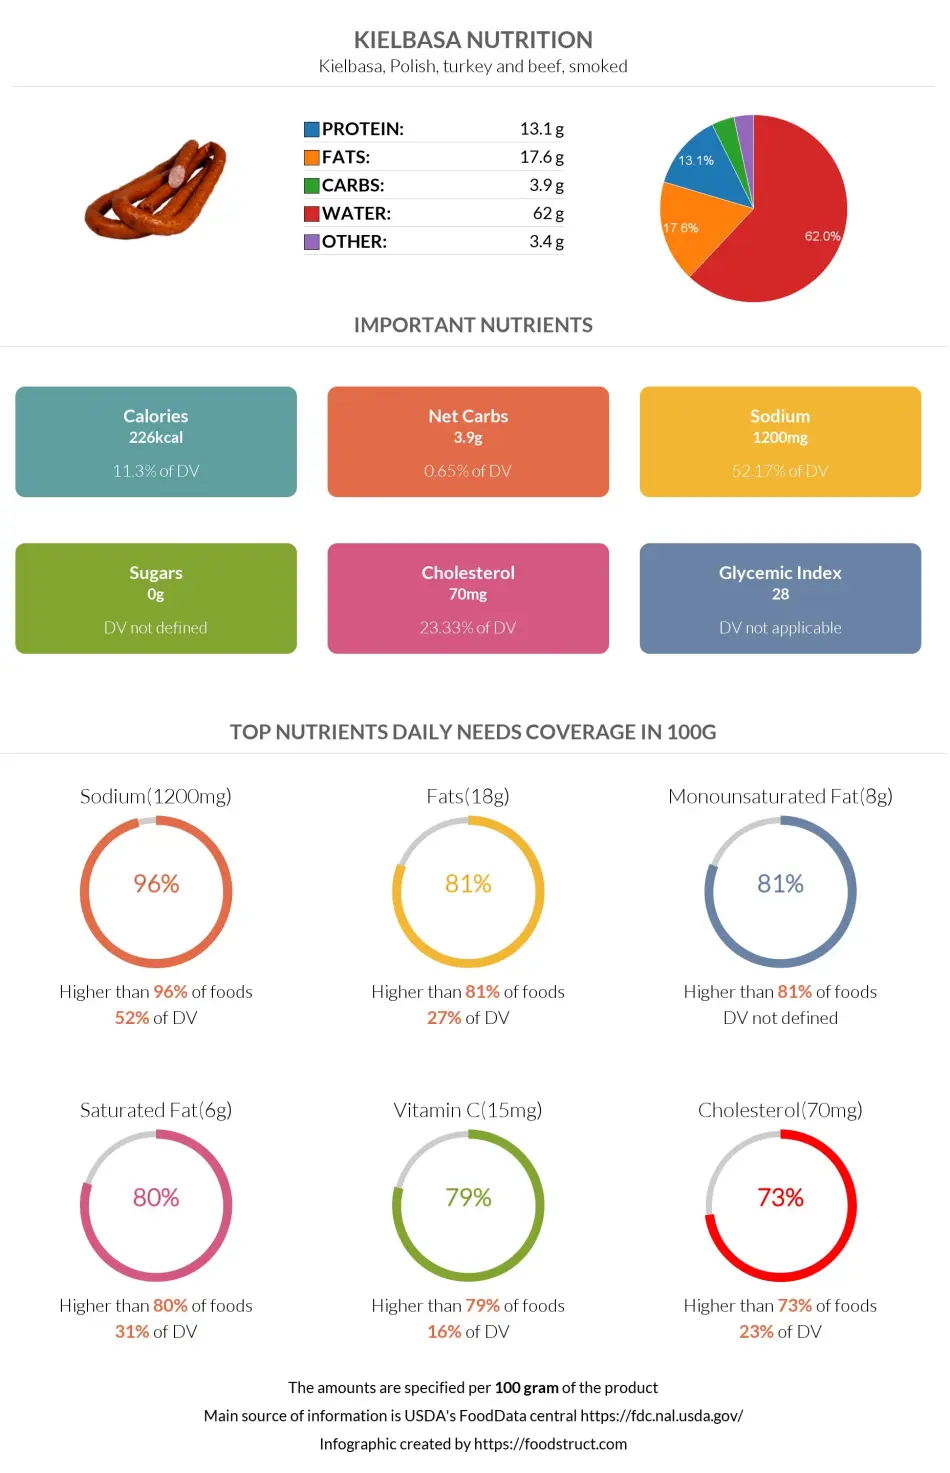 Kielbasa nutrition infographic